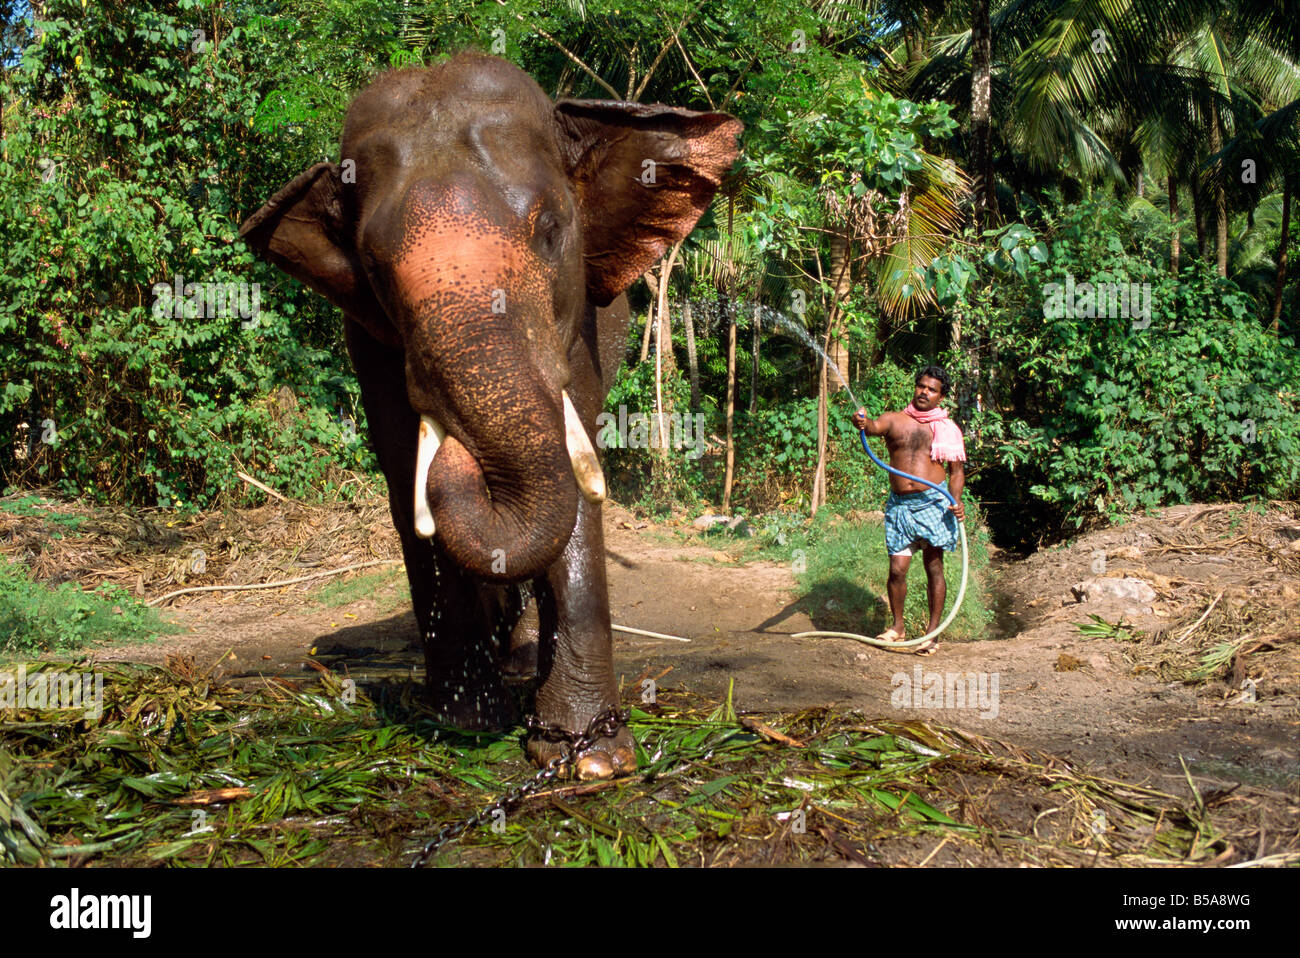 Hosing down elephant, Punnathur Kotta Elephant Fort, housing fifty elephants, financed by temples, Kerala state, India Stock Photo